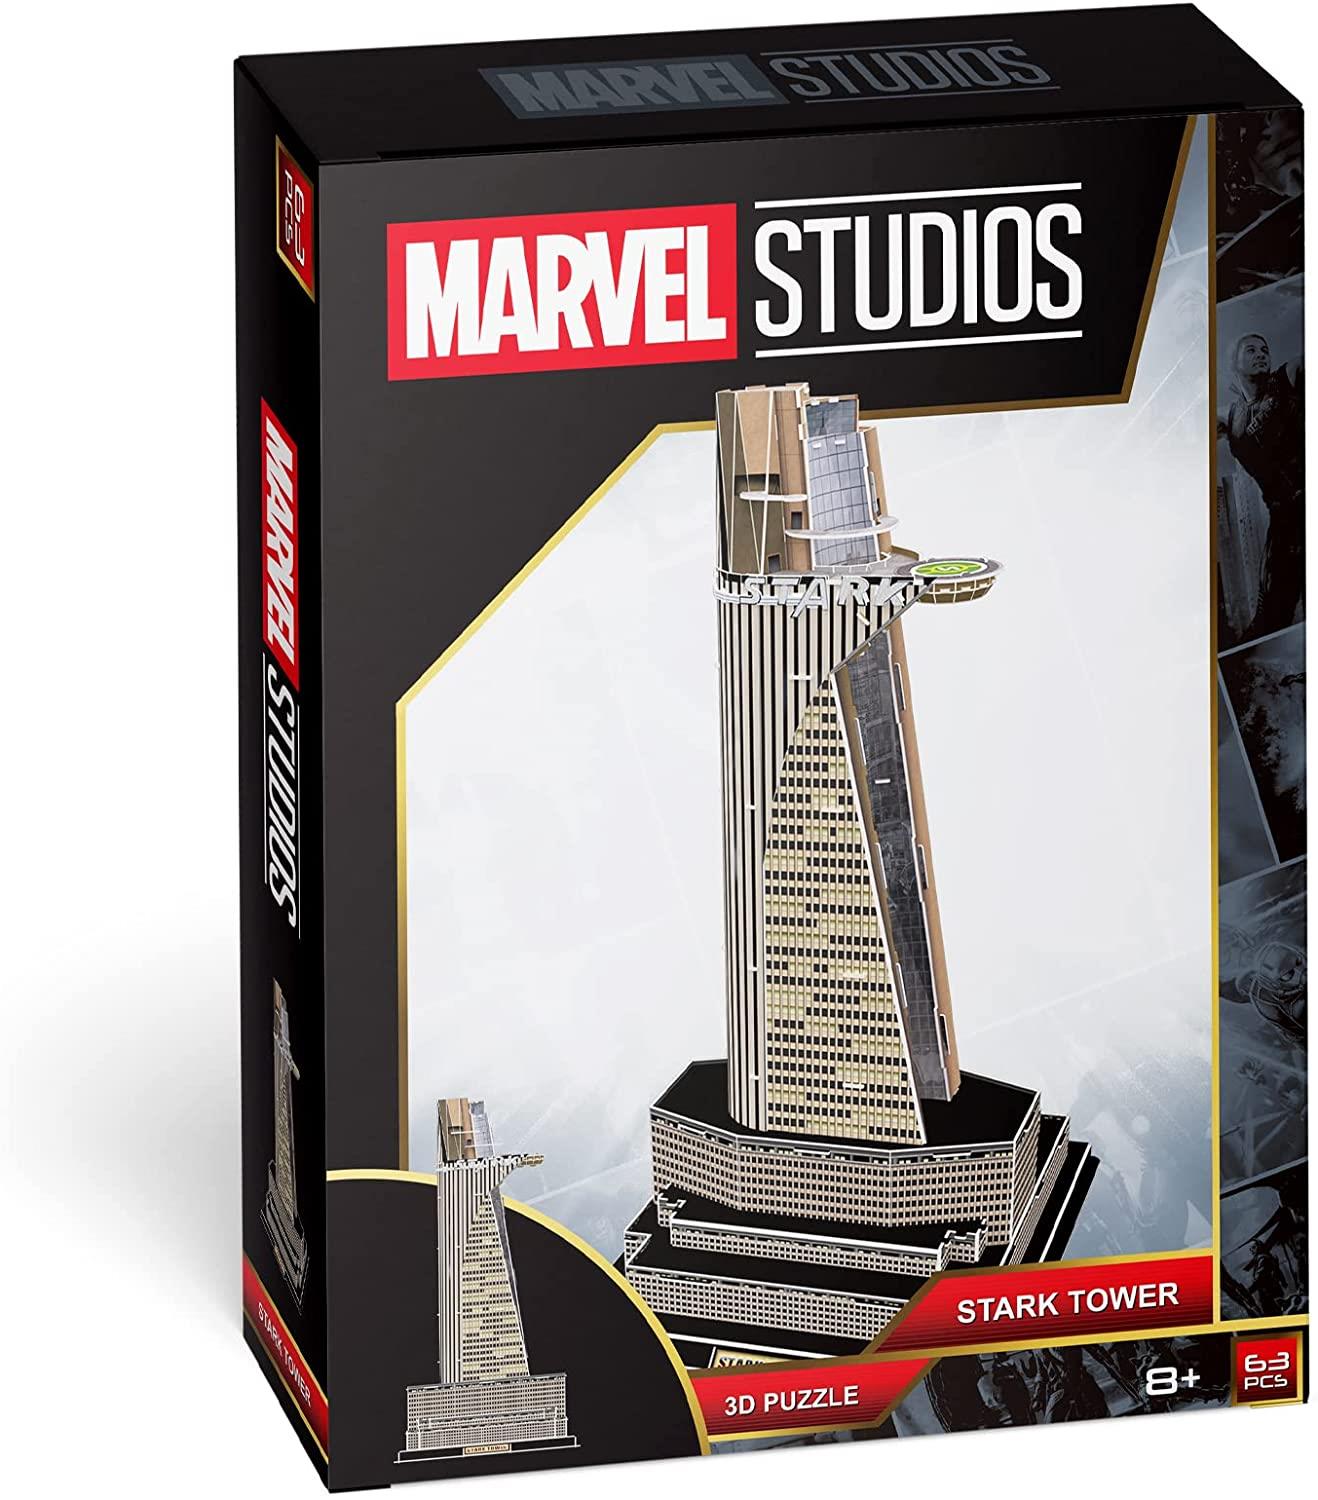 Marvel Studios Stark Tower 3D Model Puzzle